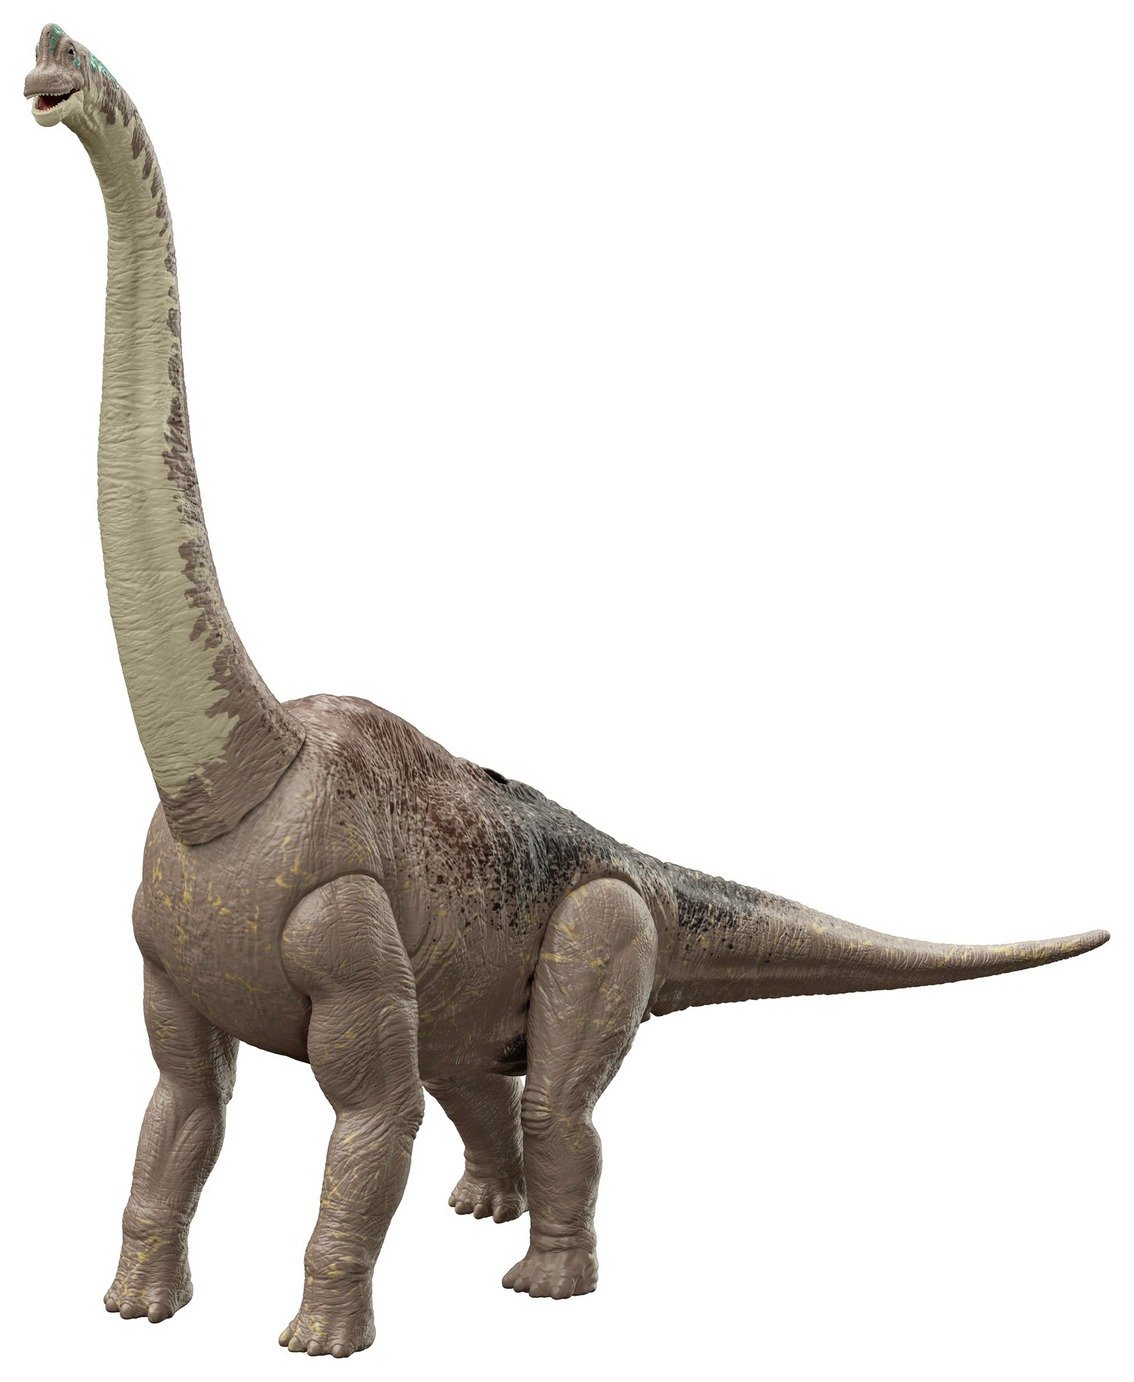 Jurassic World Dominion Brachiosaurus Dinosaur review